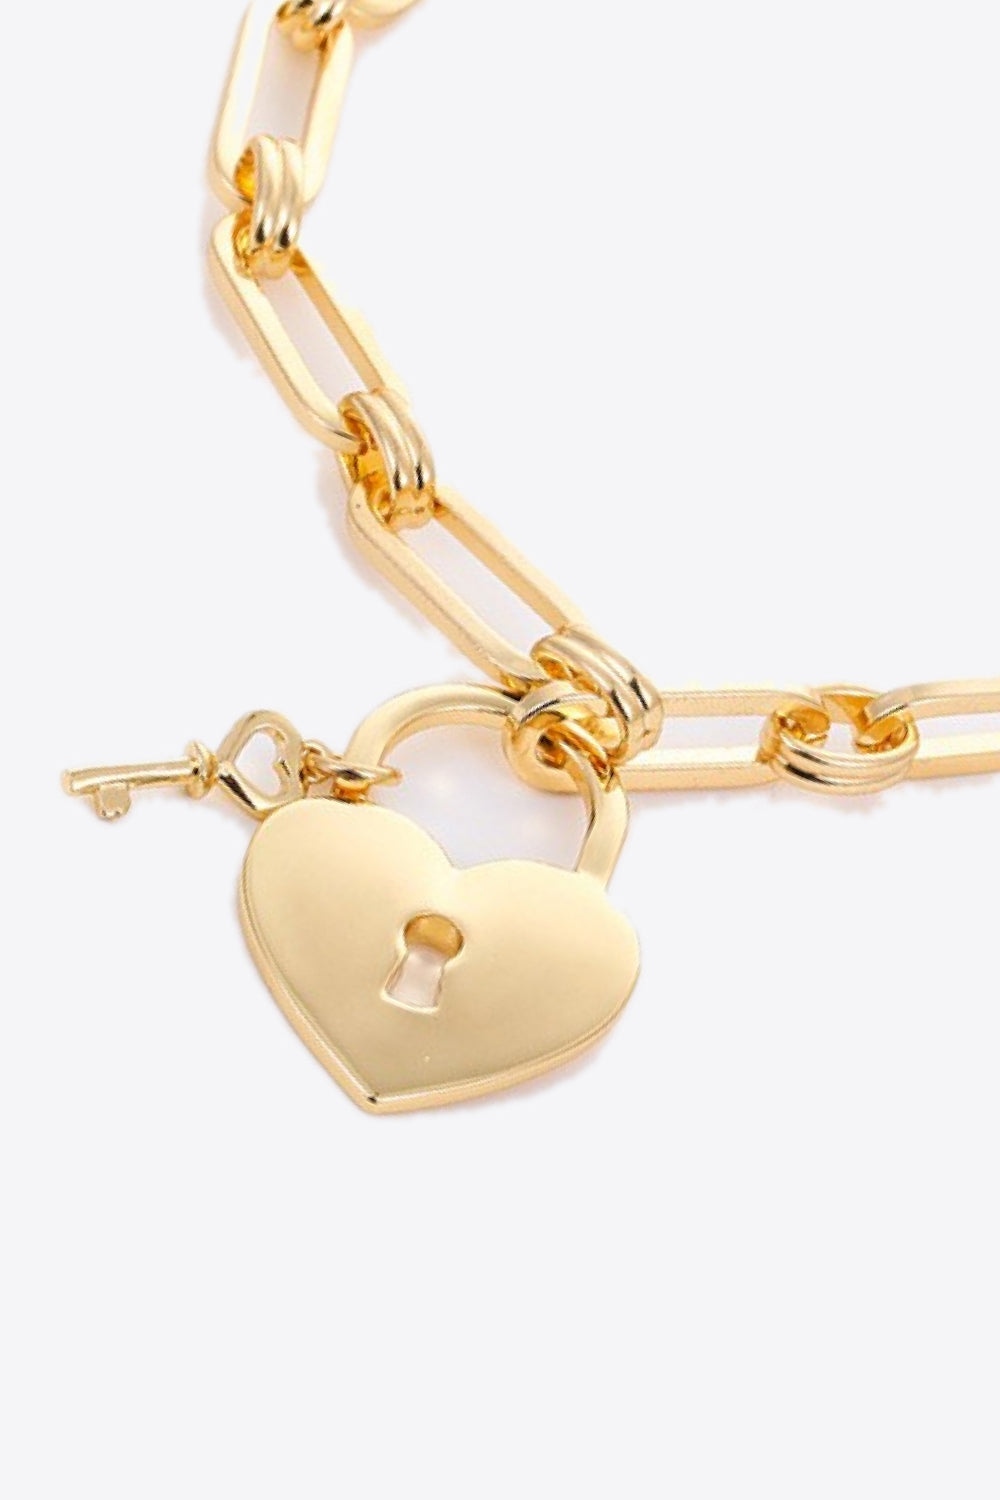 5-Piece Wholesale Heart Lock Charm Chain Bracelet